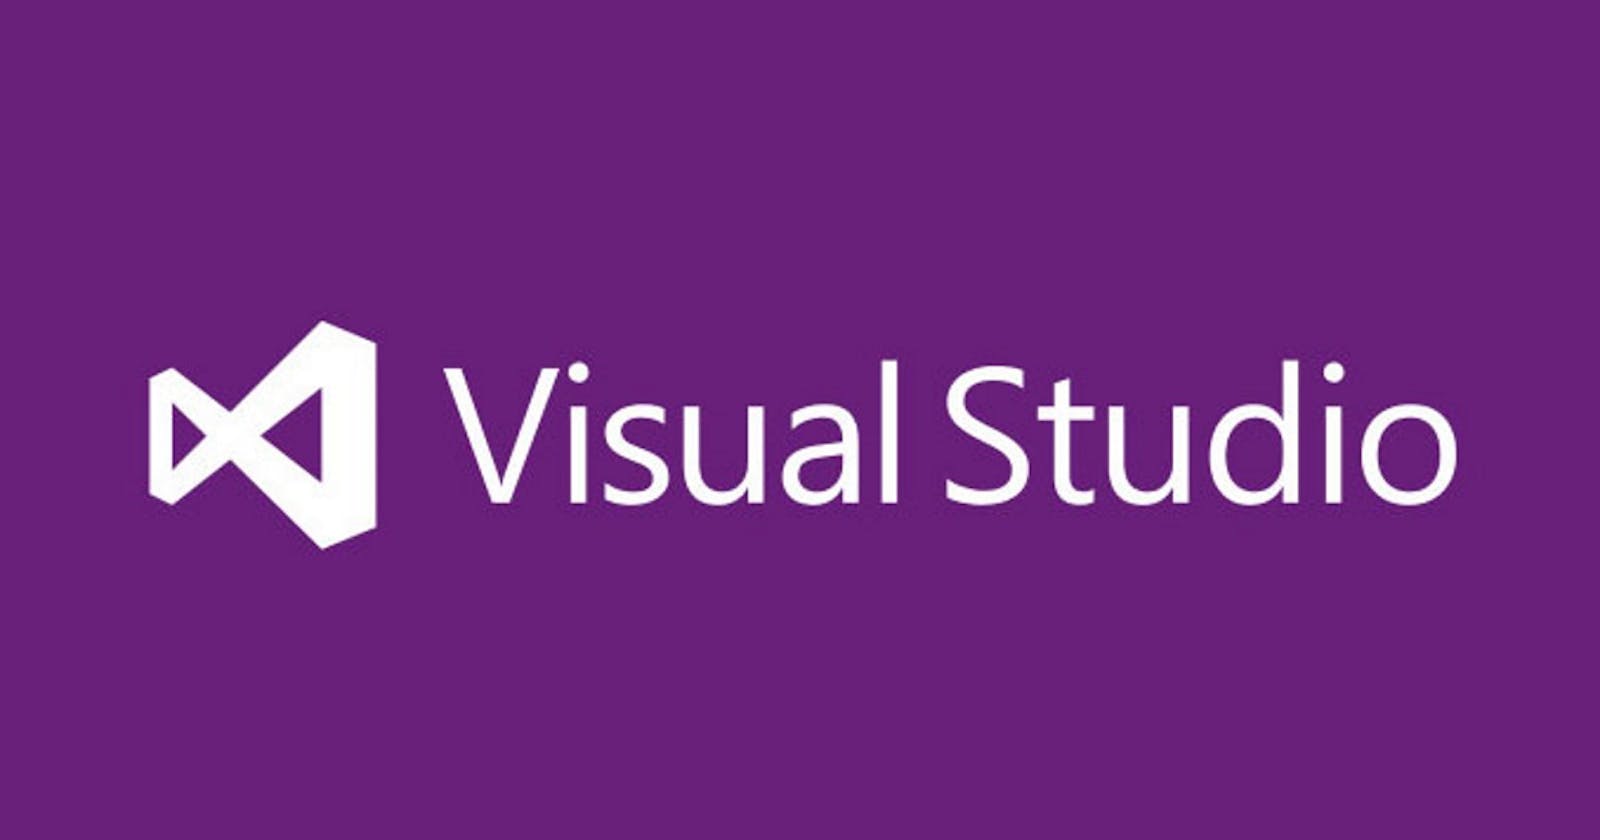 Visual Studio Dark Theme for EnlighterJS